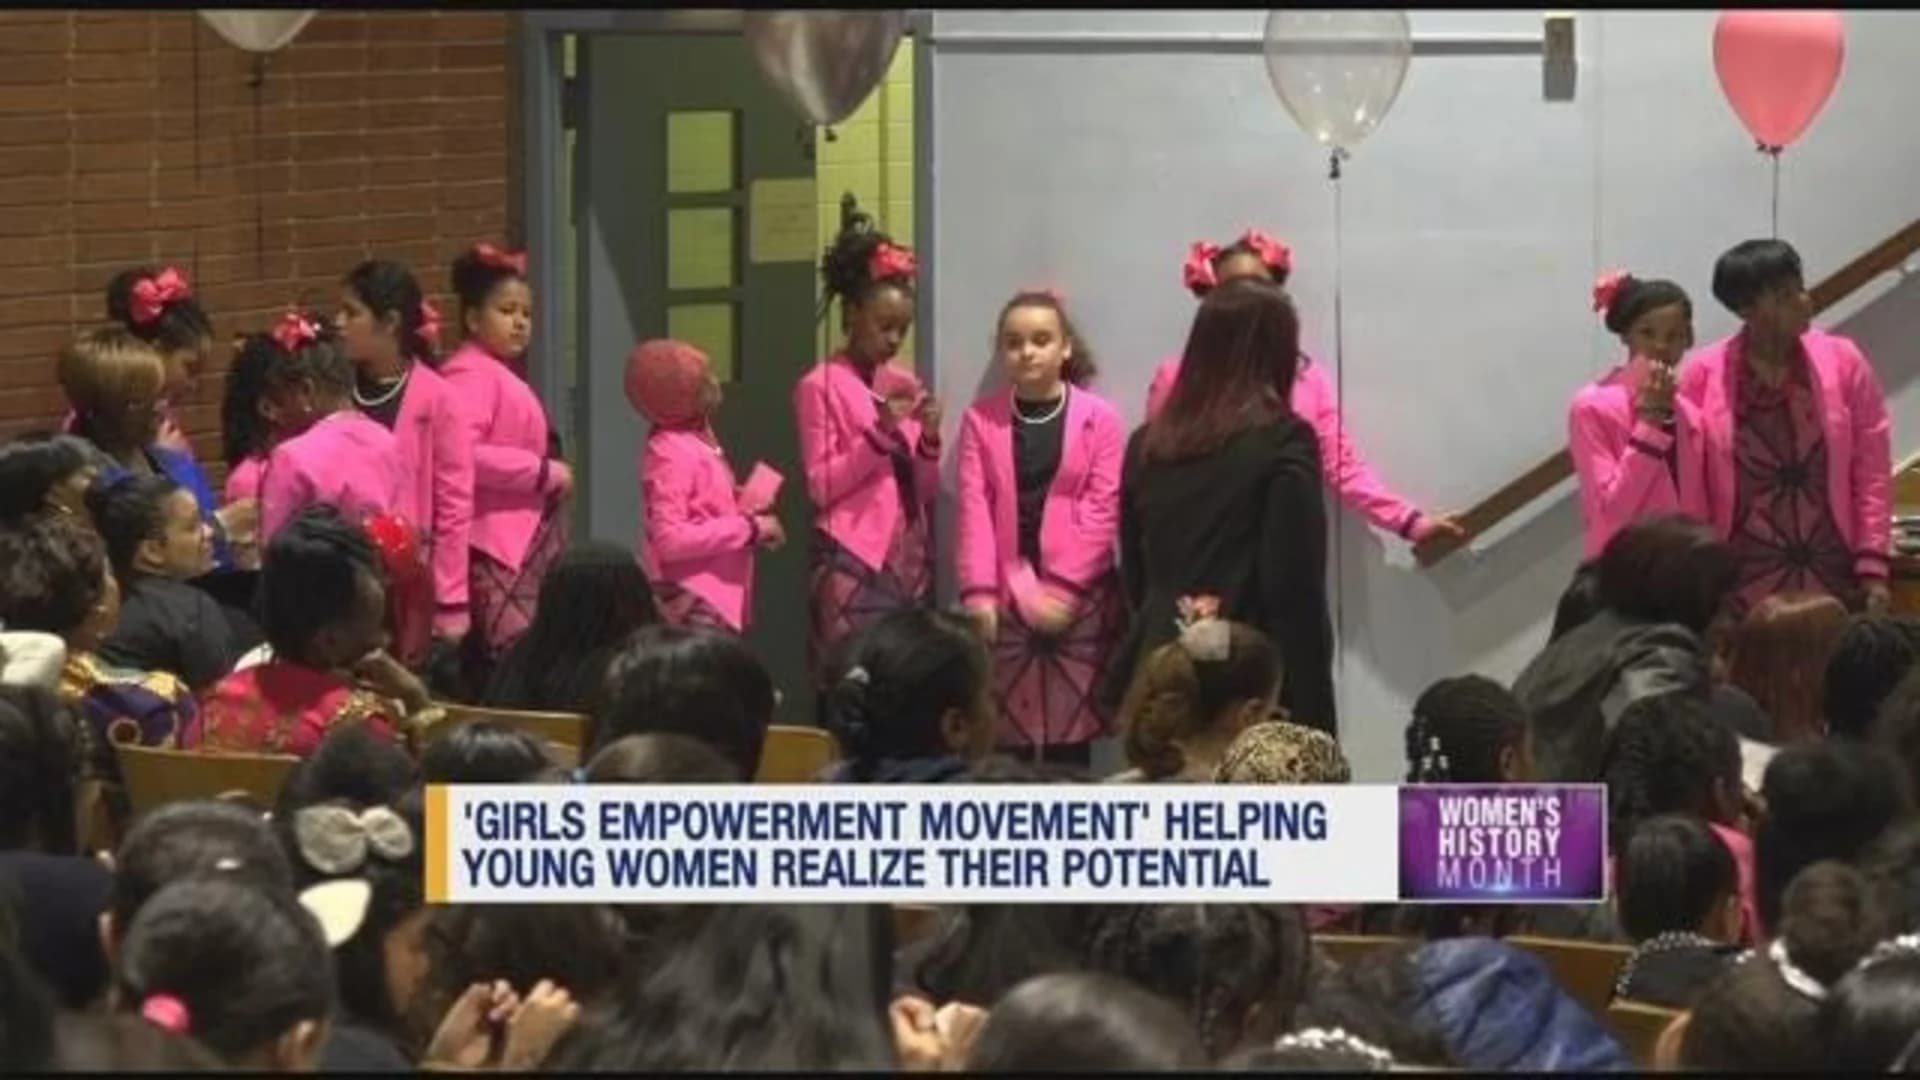 East New York event on girls’ empowerment draws hundreds